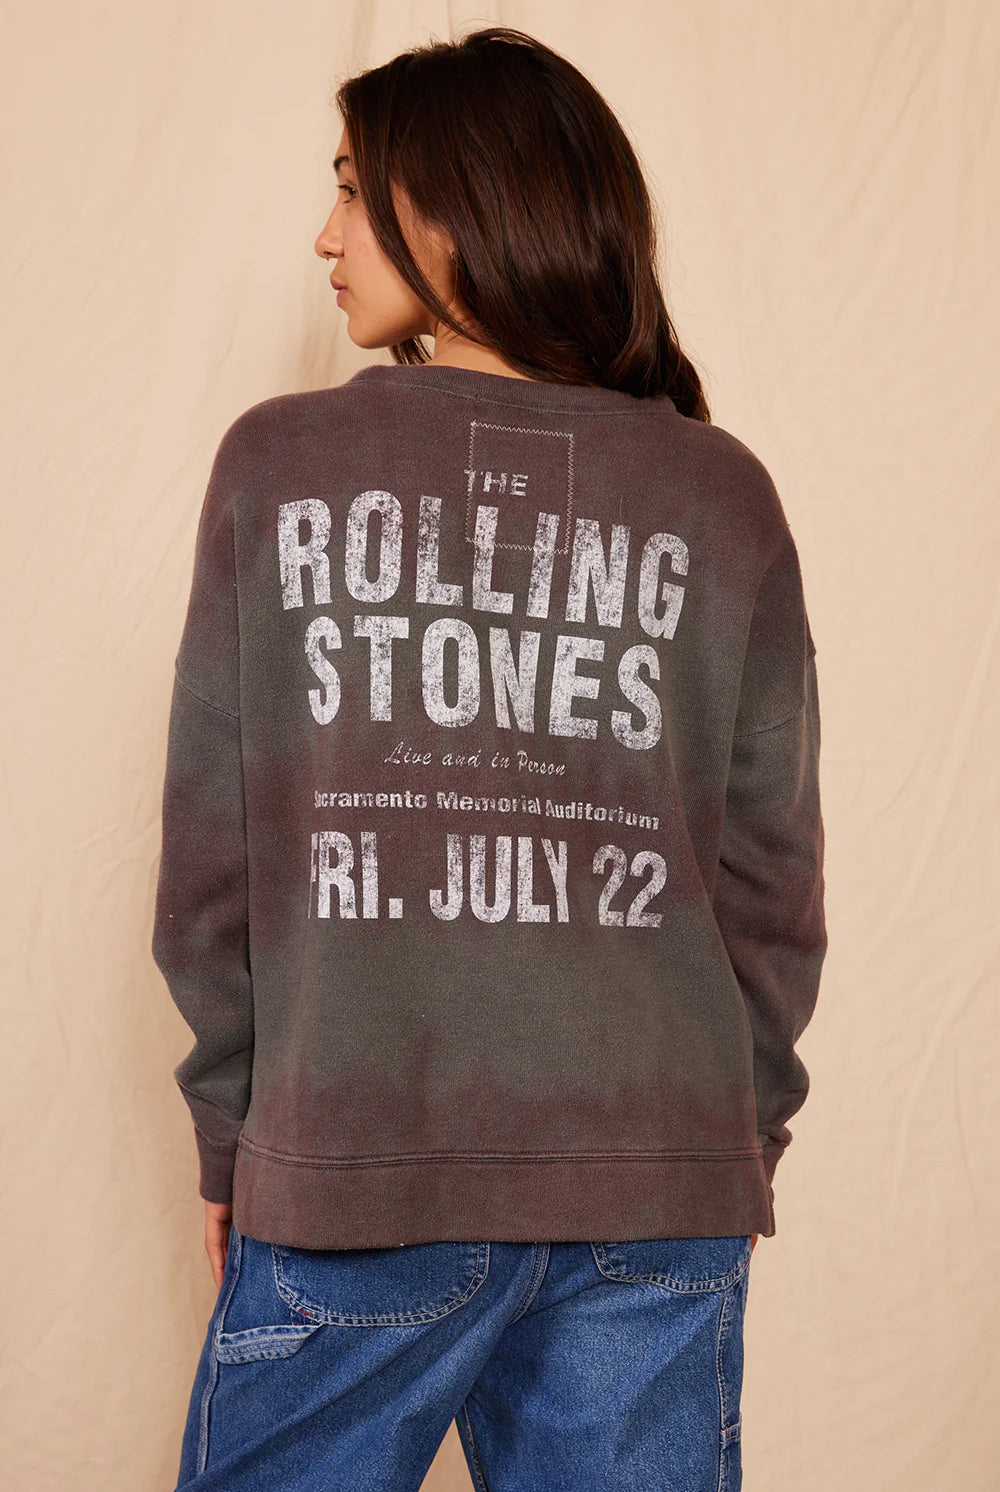 
  
  The Rolling Stone Sweatshirt
  
